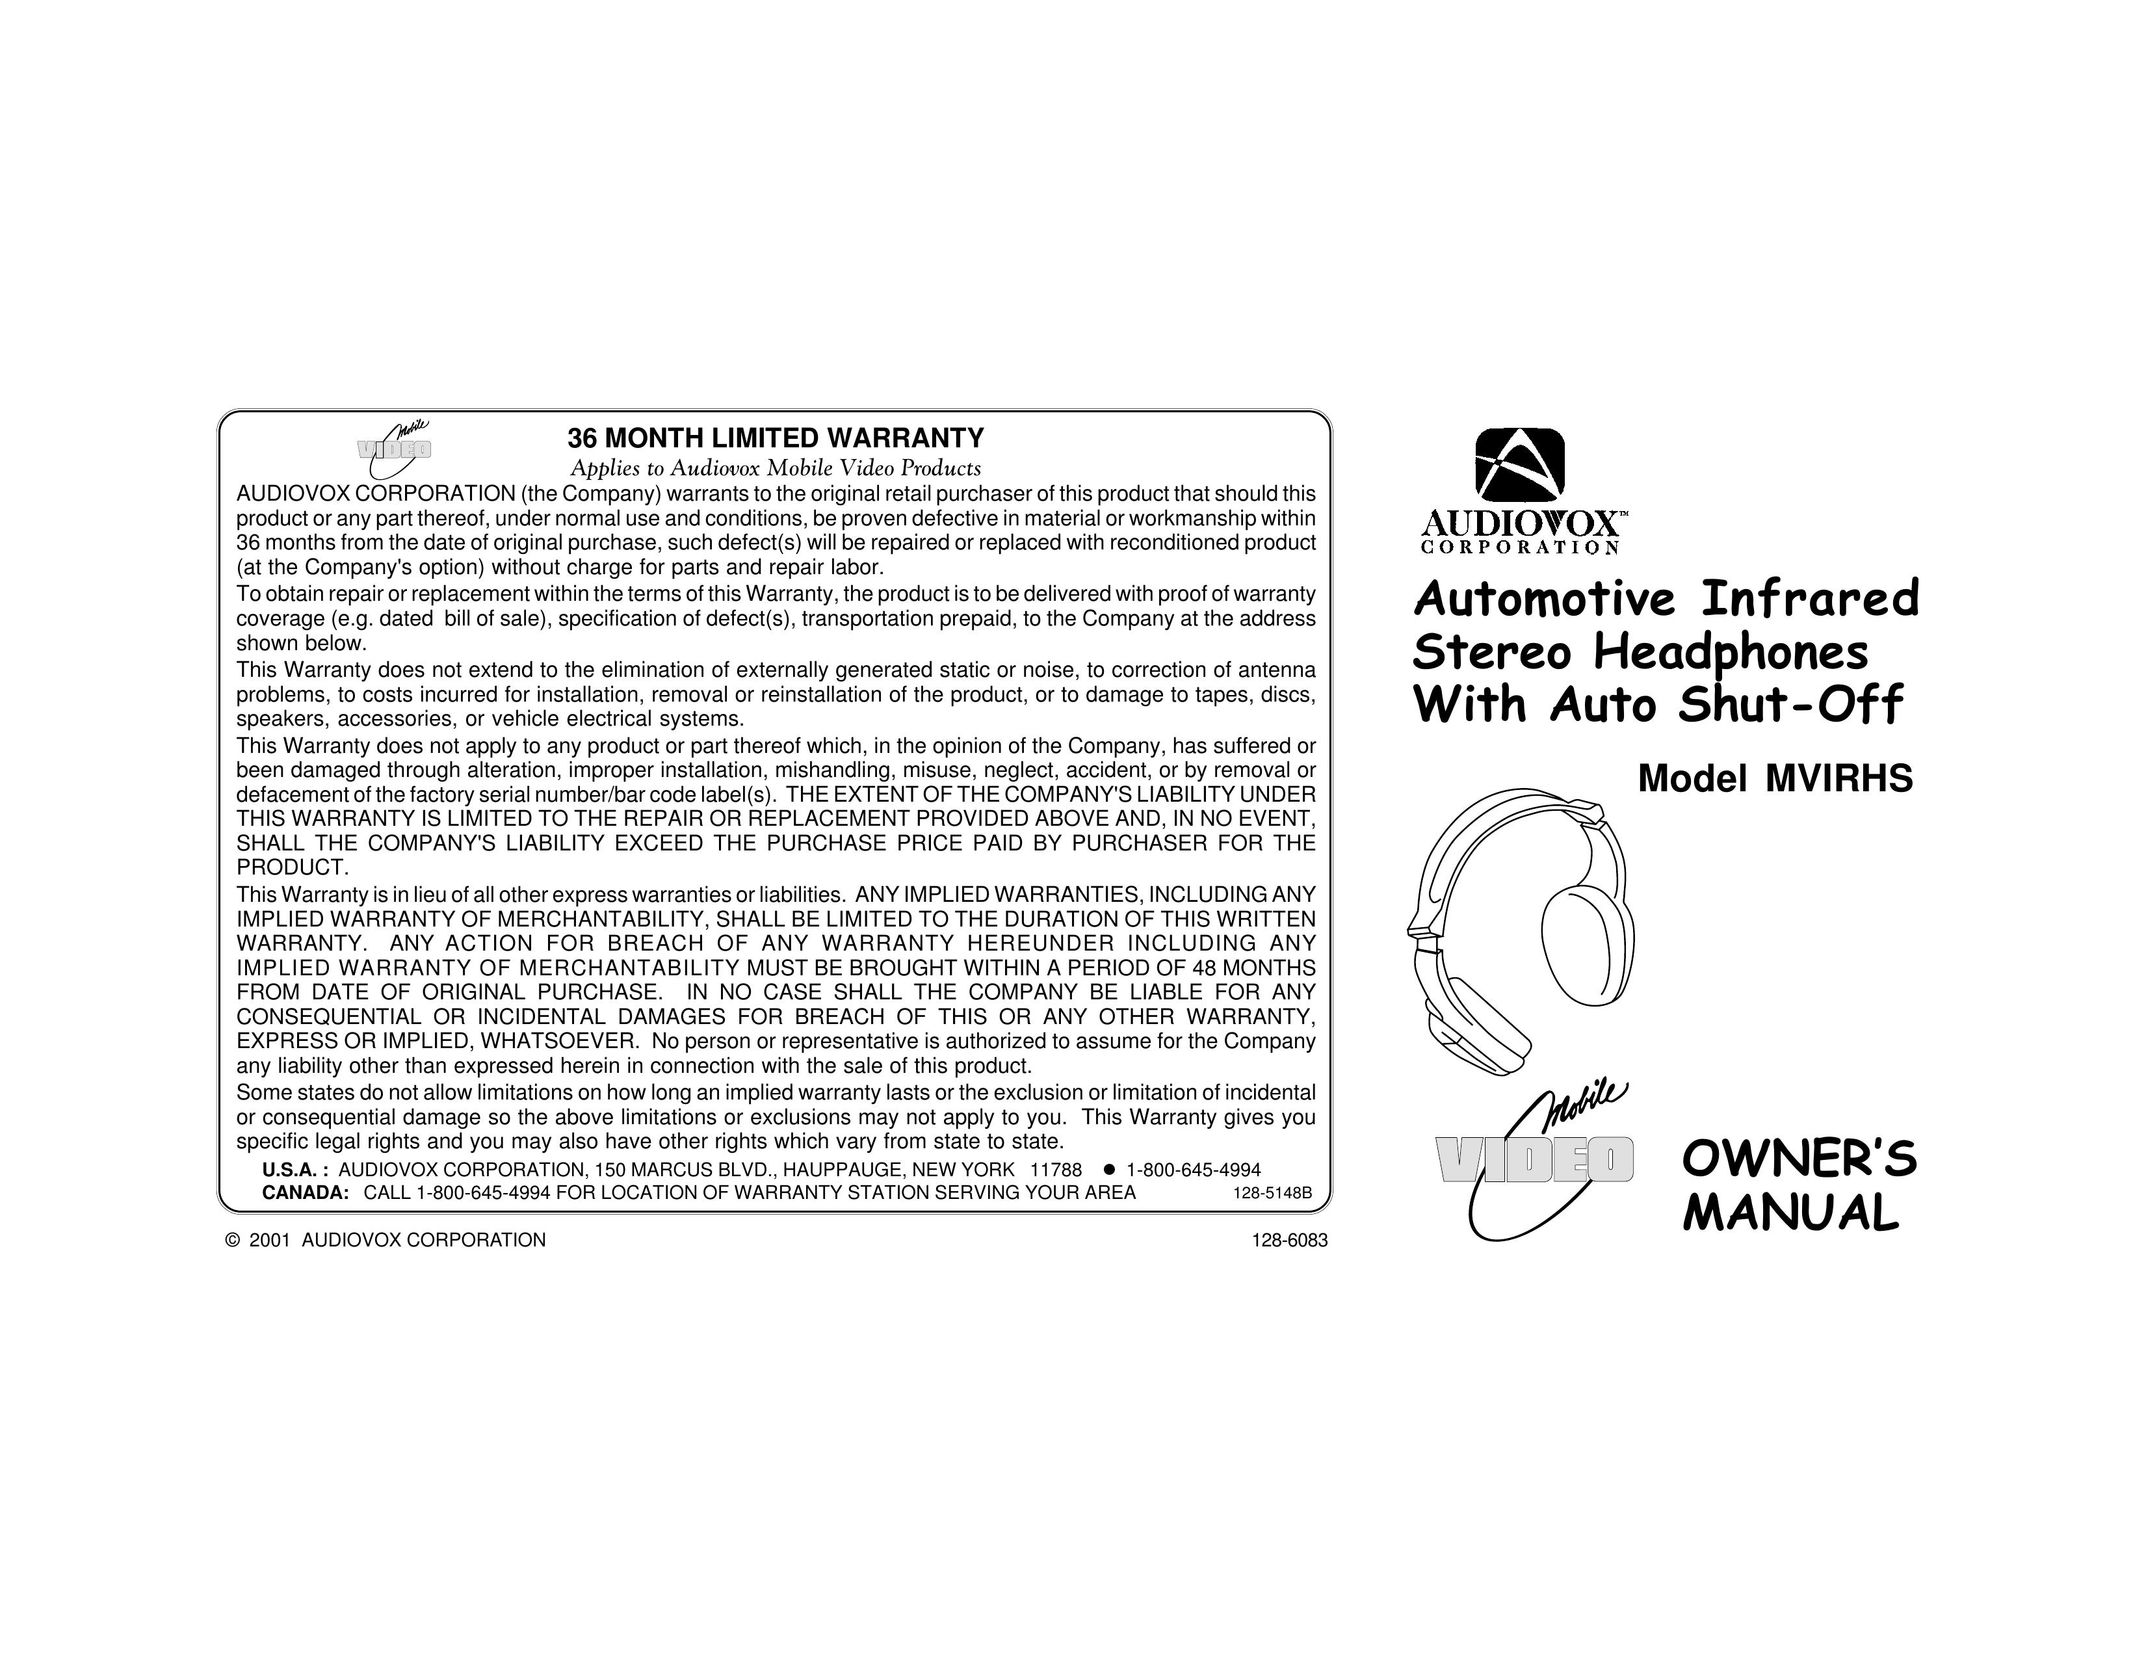 Audiovox MVIRHS Headphones User Manual